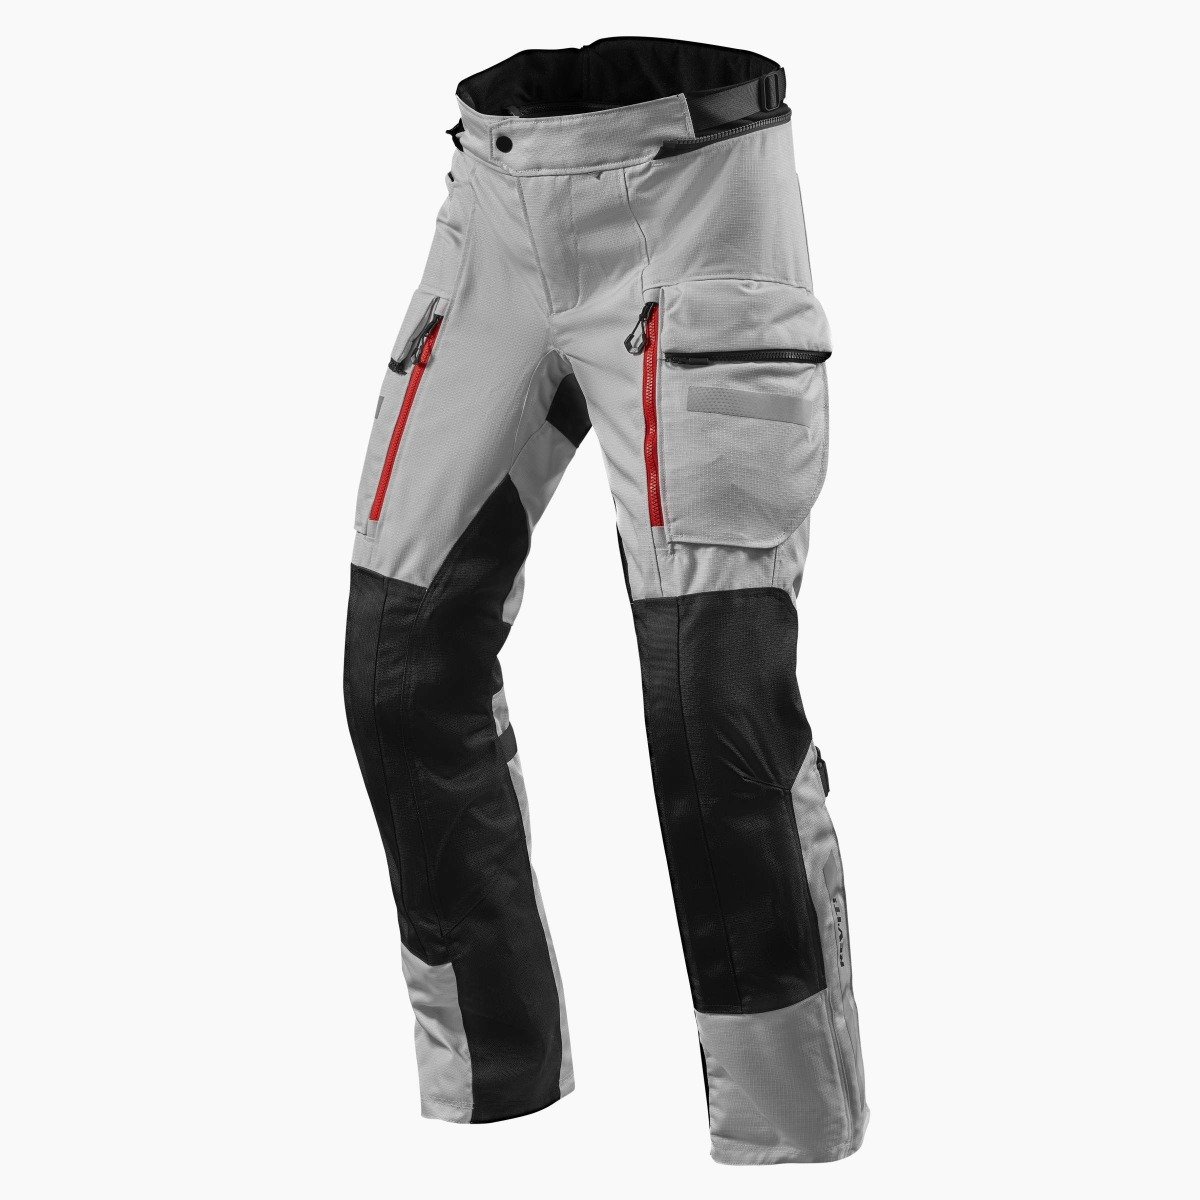 Image of REV'IT! Sand 4 H2O Short Silver Black Motorcycle Pants Talla S